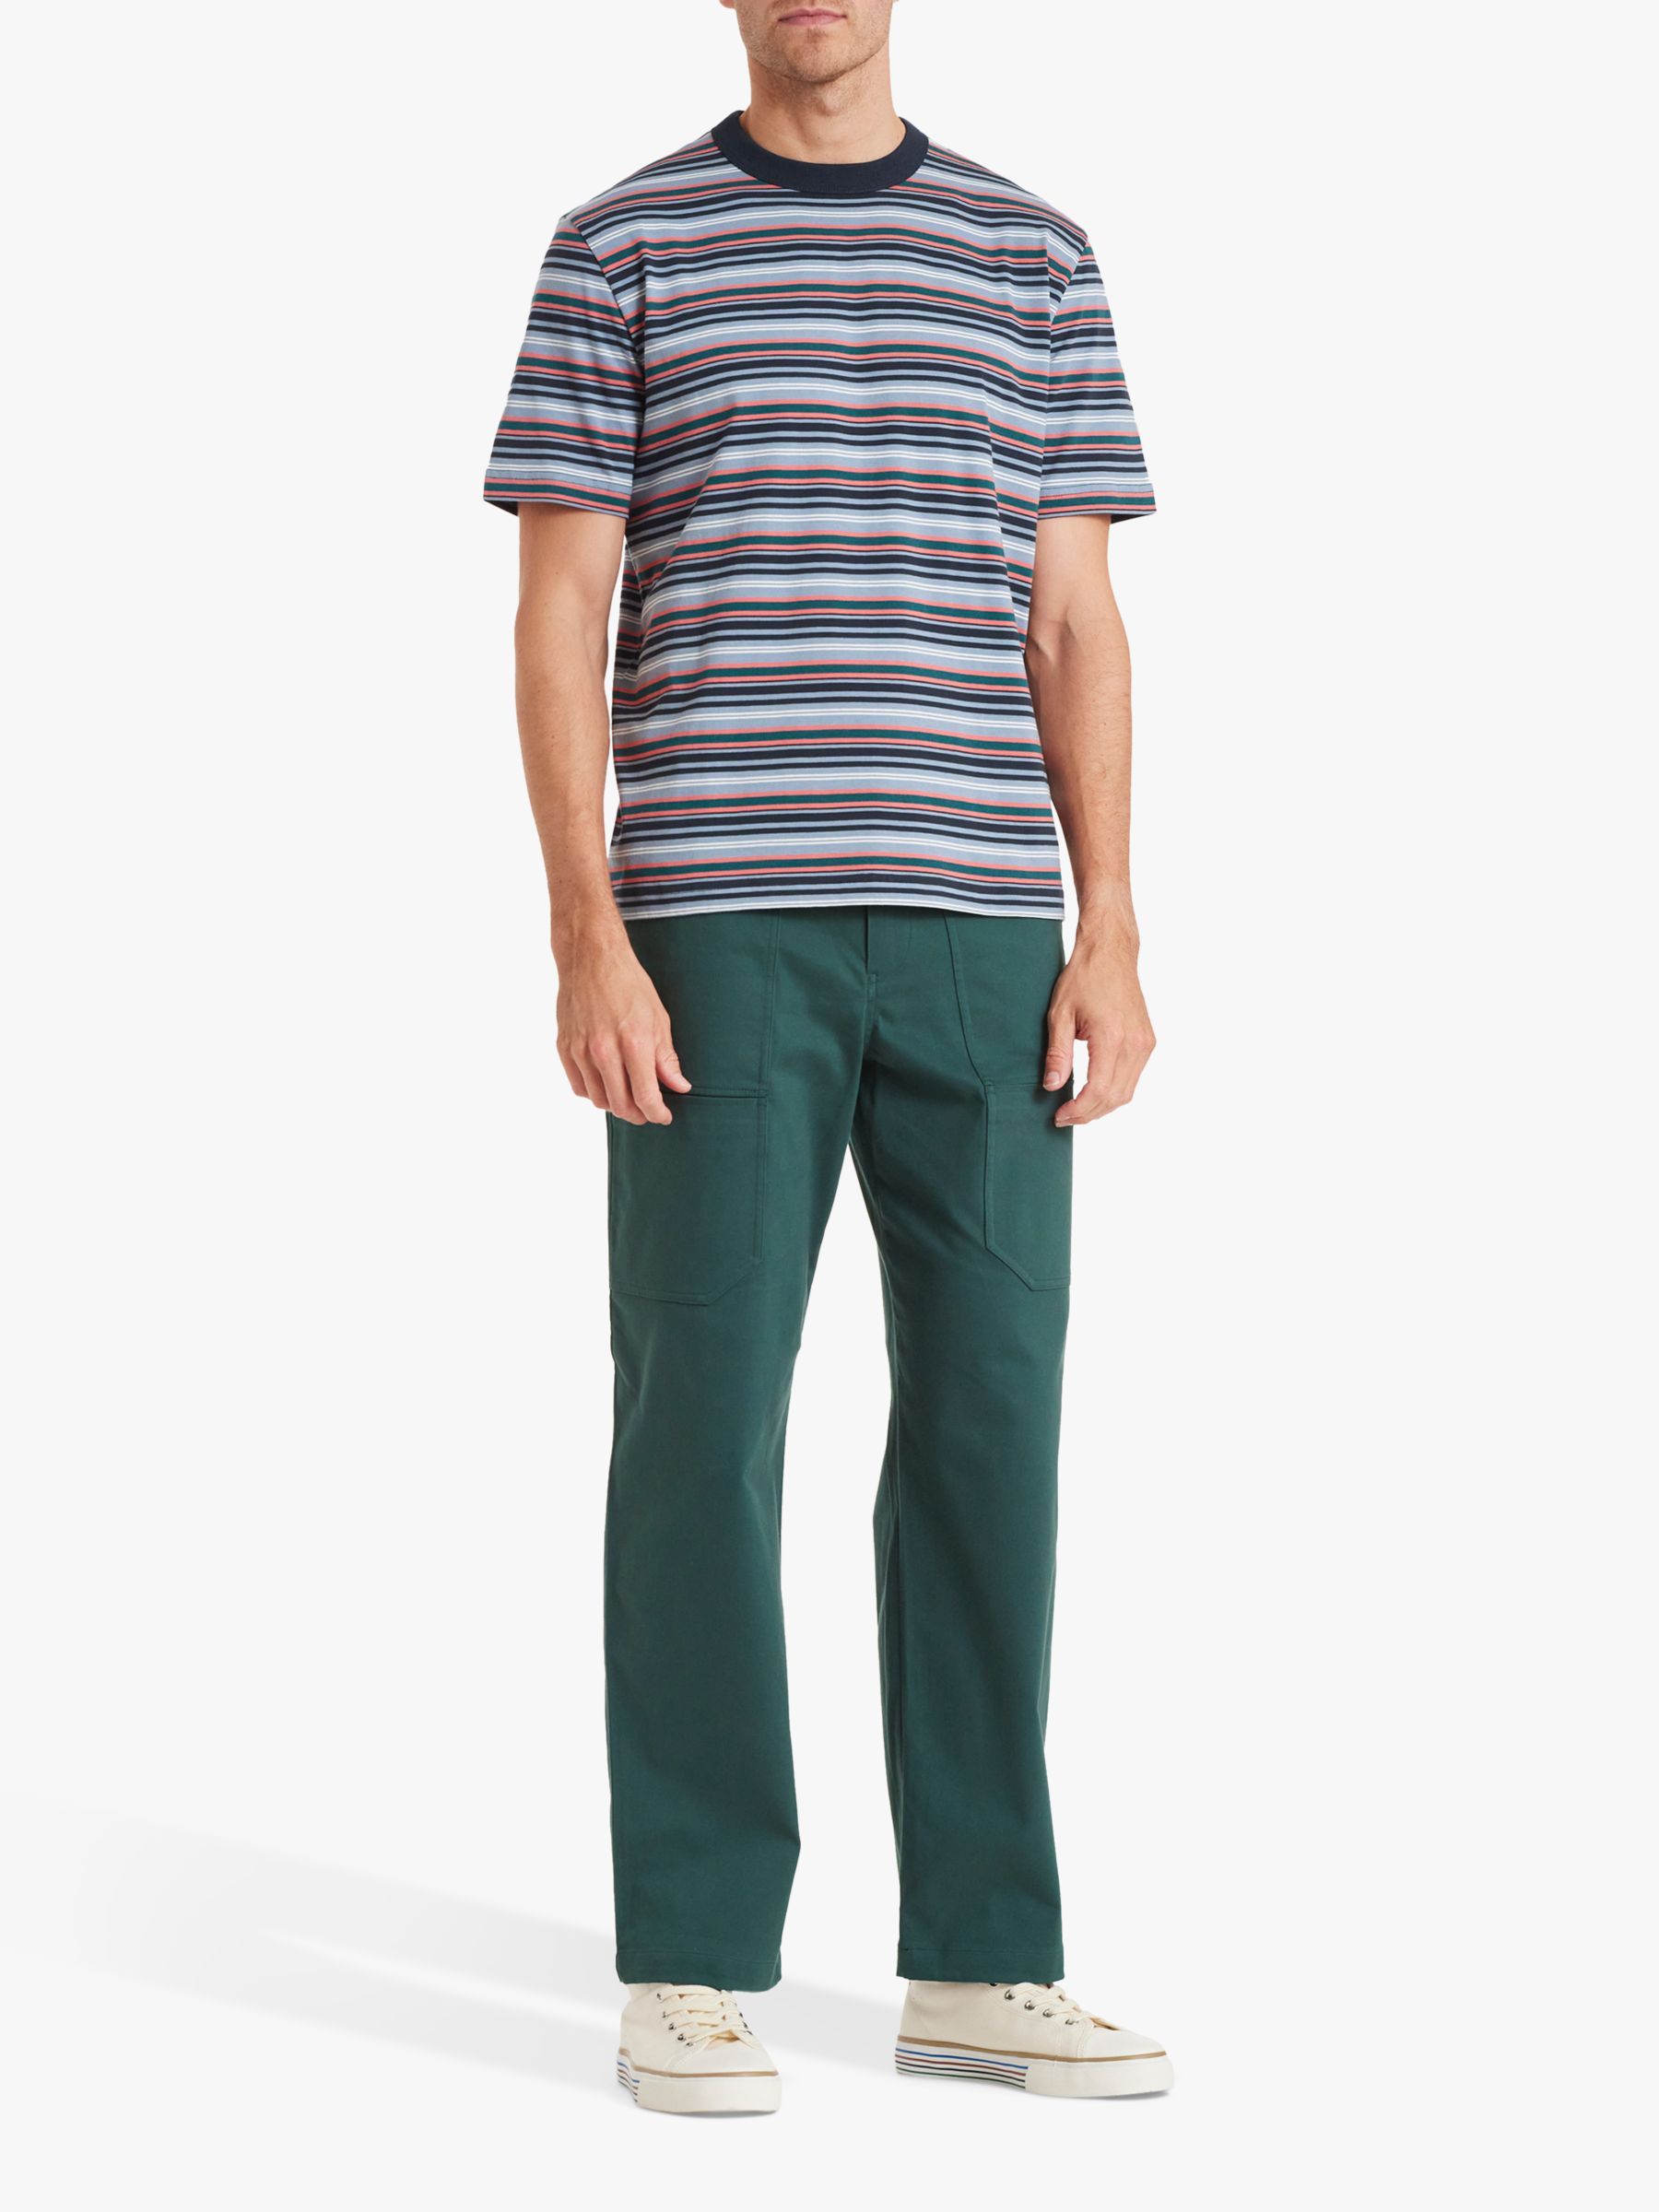 Paul Smith Organic Cotton Short Sleeve Stripe T-Shirt, Blue/Multi, S